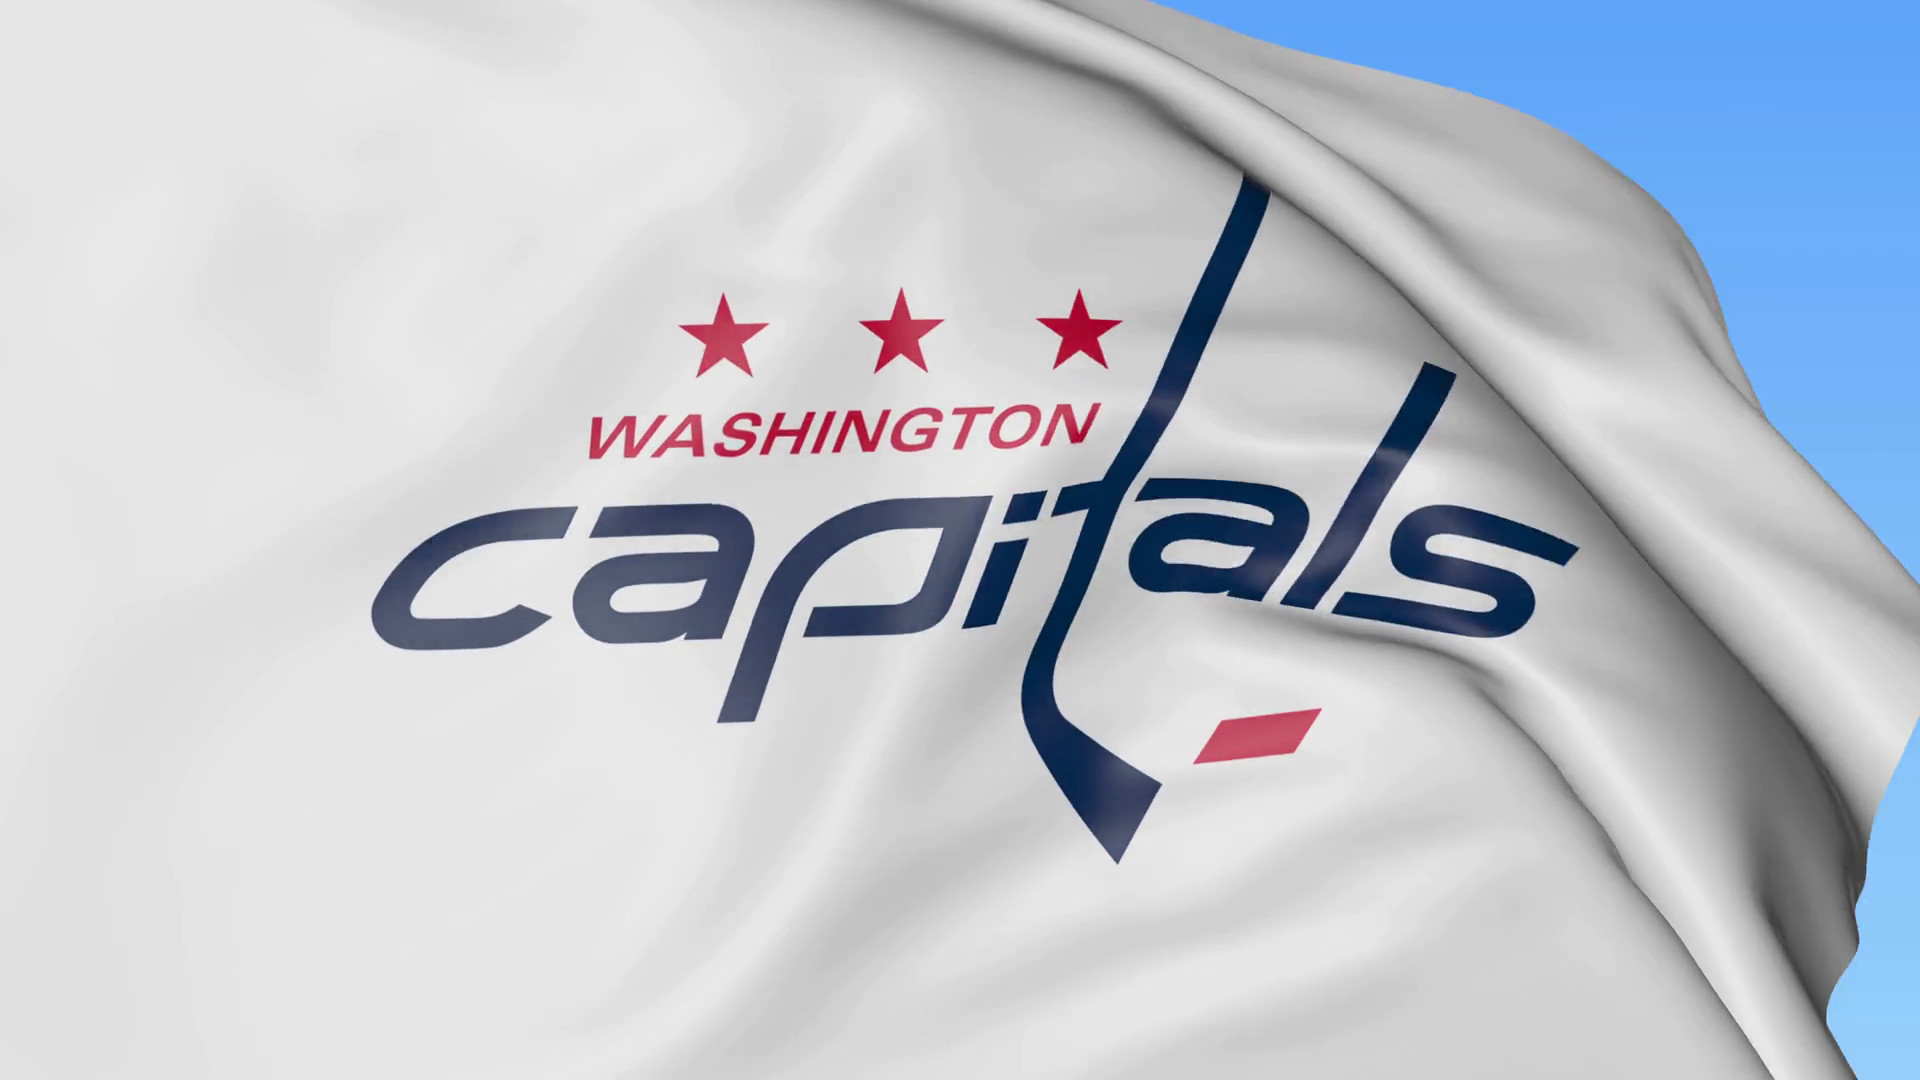 1920x1080 Close-up of waving flag with Washington Capitals NHL hockey team logo,  seamless loop, blue background. Editorial animation.